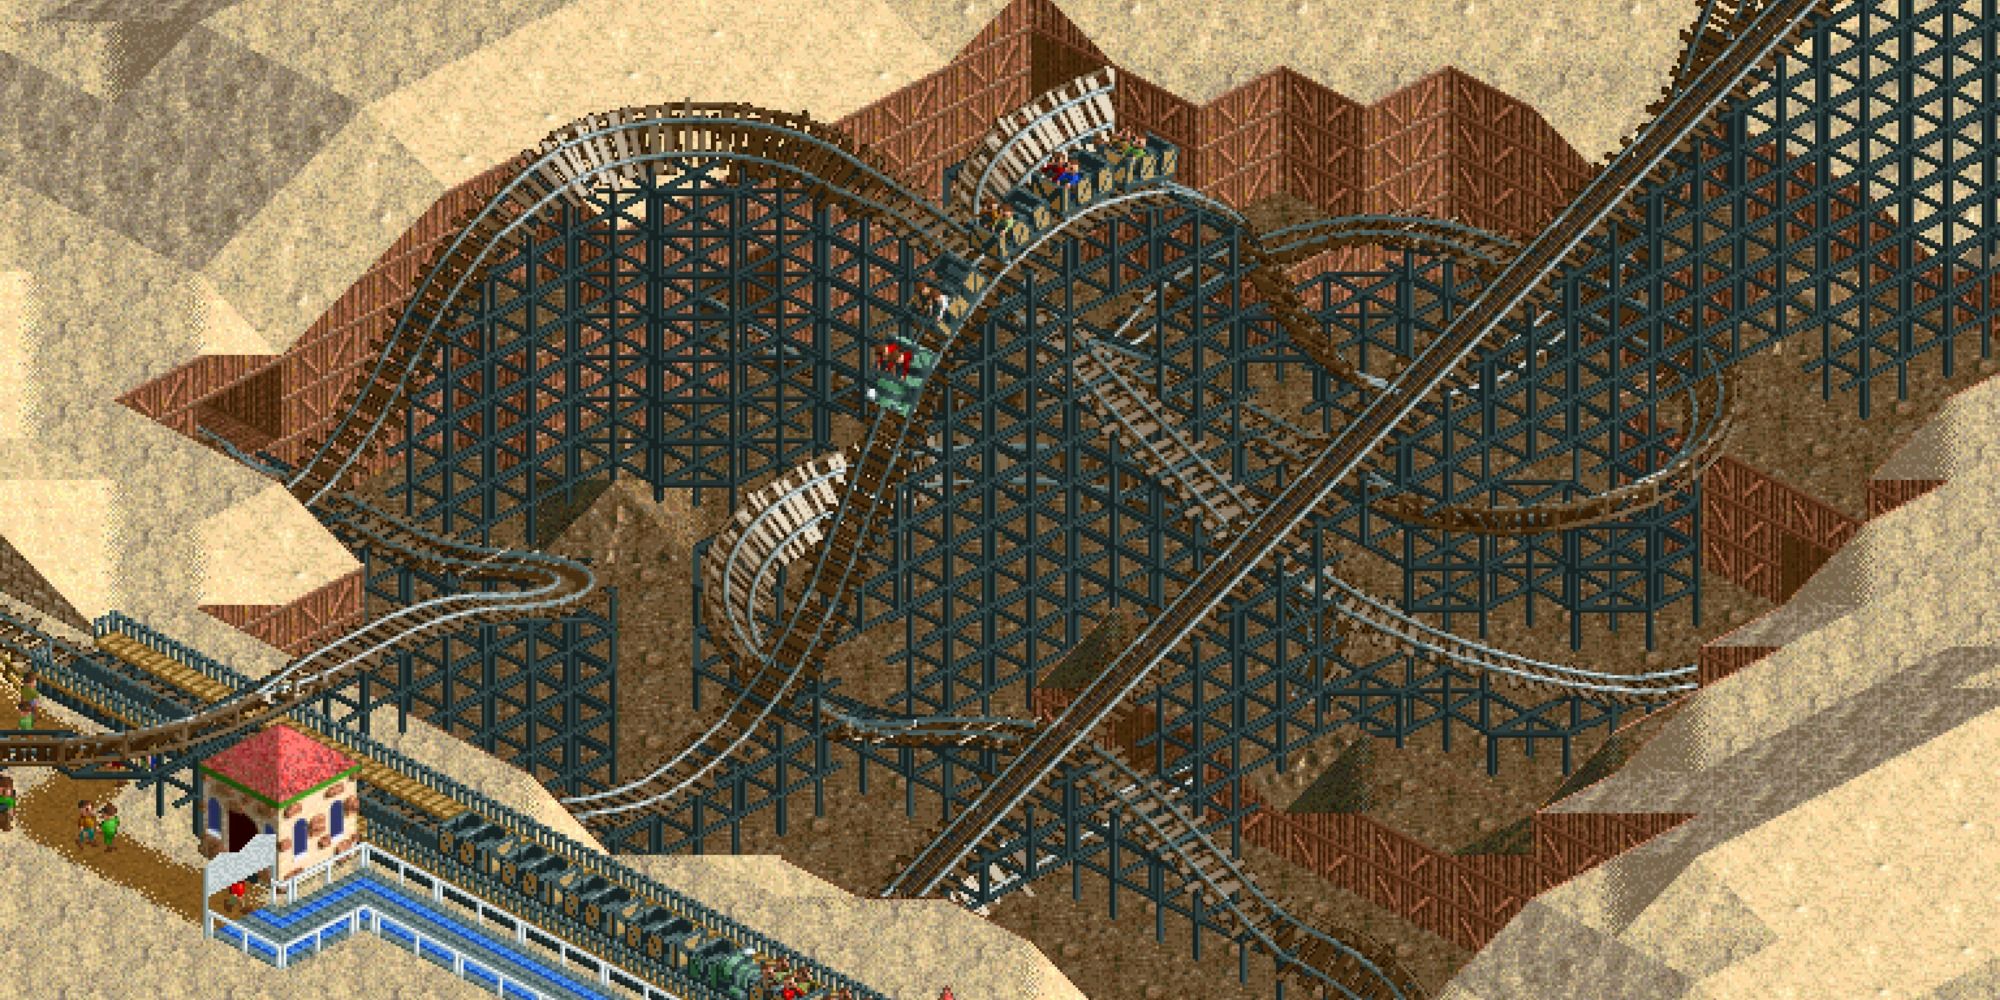 Roller Coaster Tycoon Runaway Mine Train coaster in a desert park